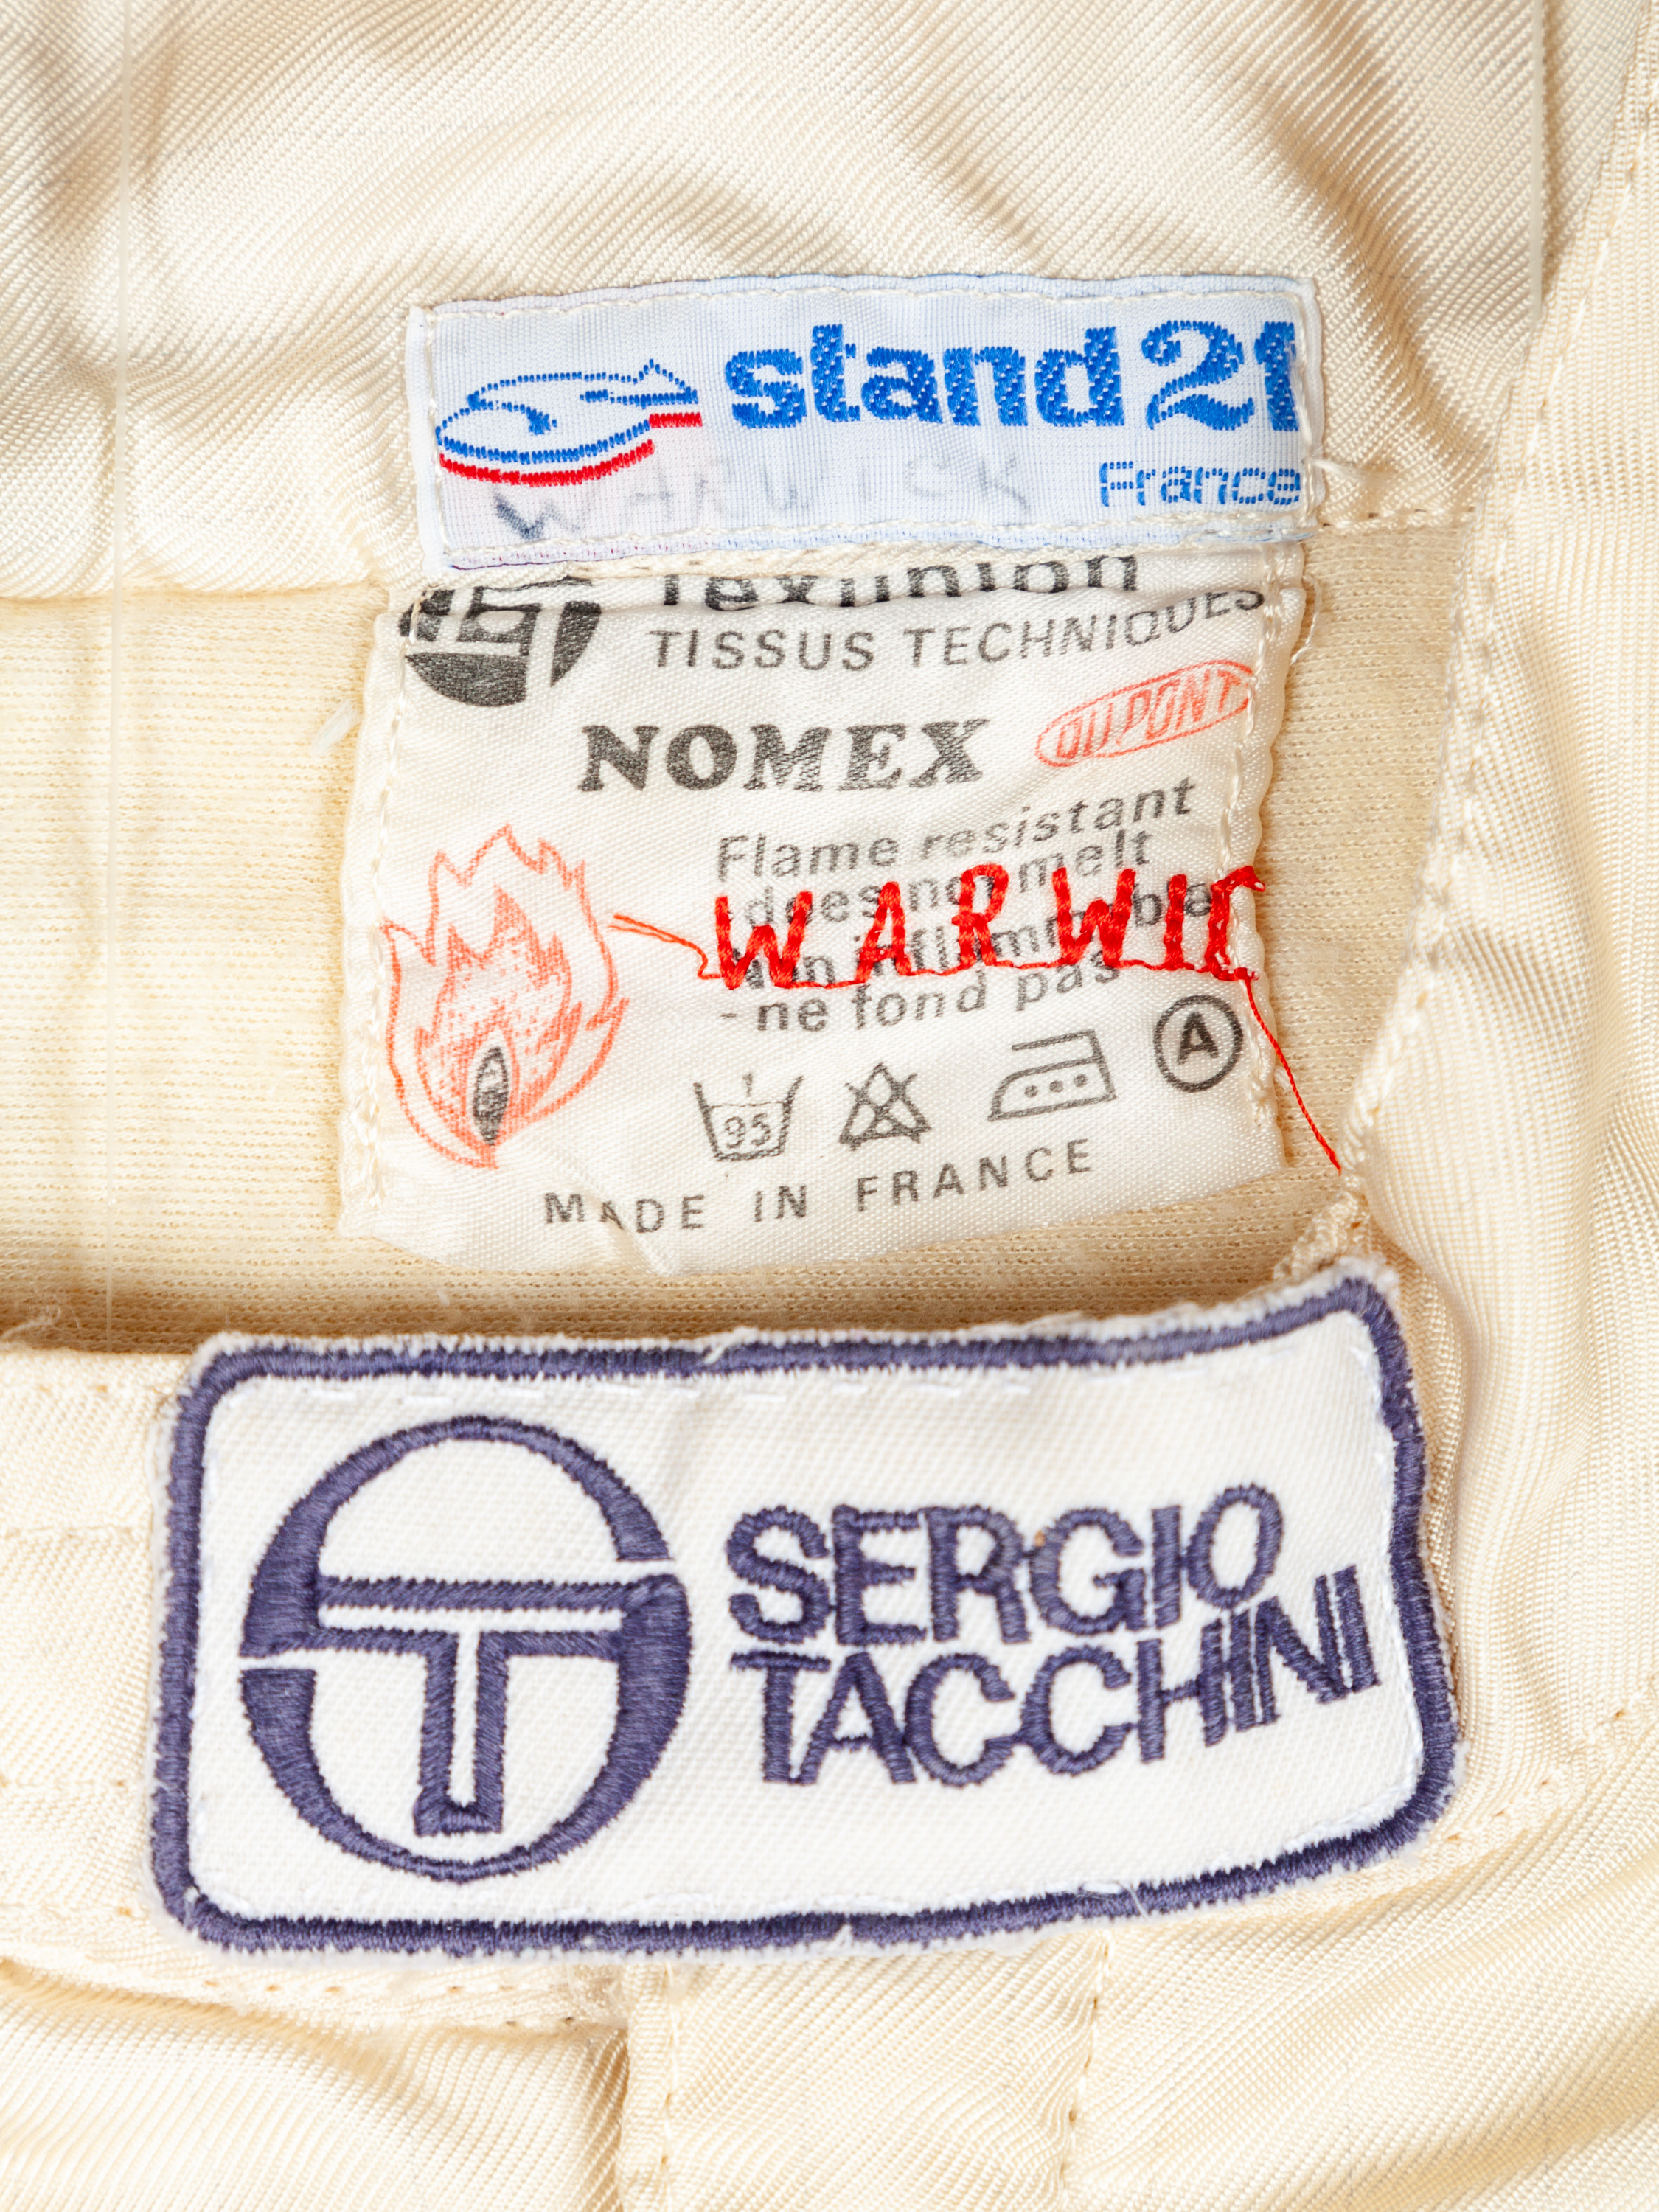 Derek Warwick F1 Renault race suit circa 1984, Stand 21 - Image 7 of 8